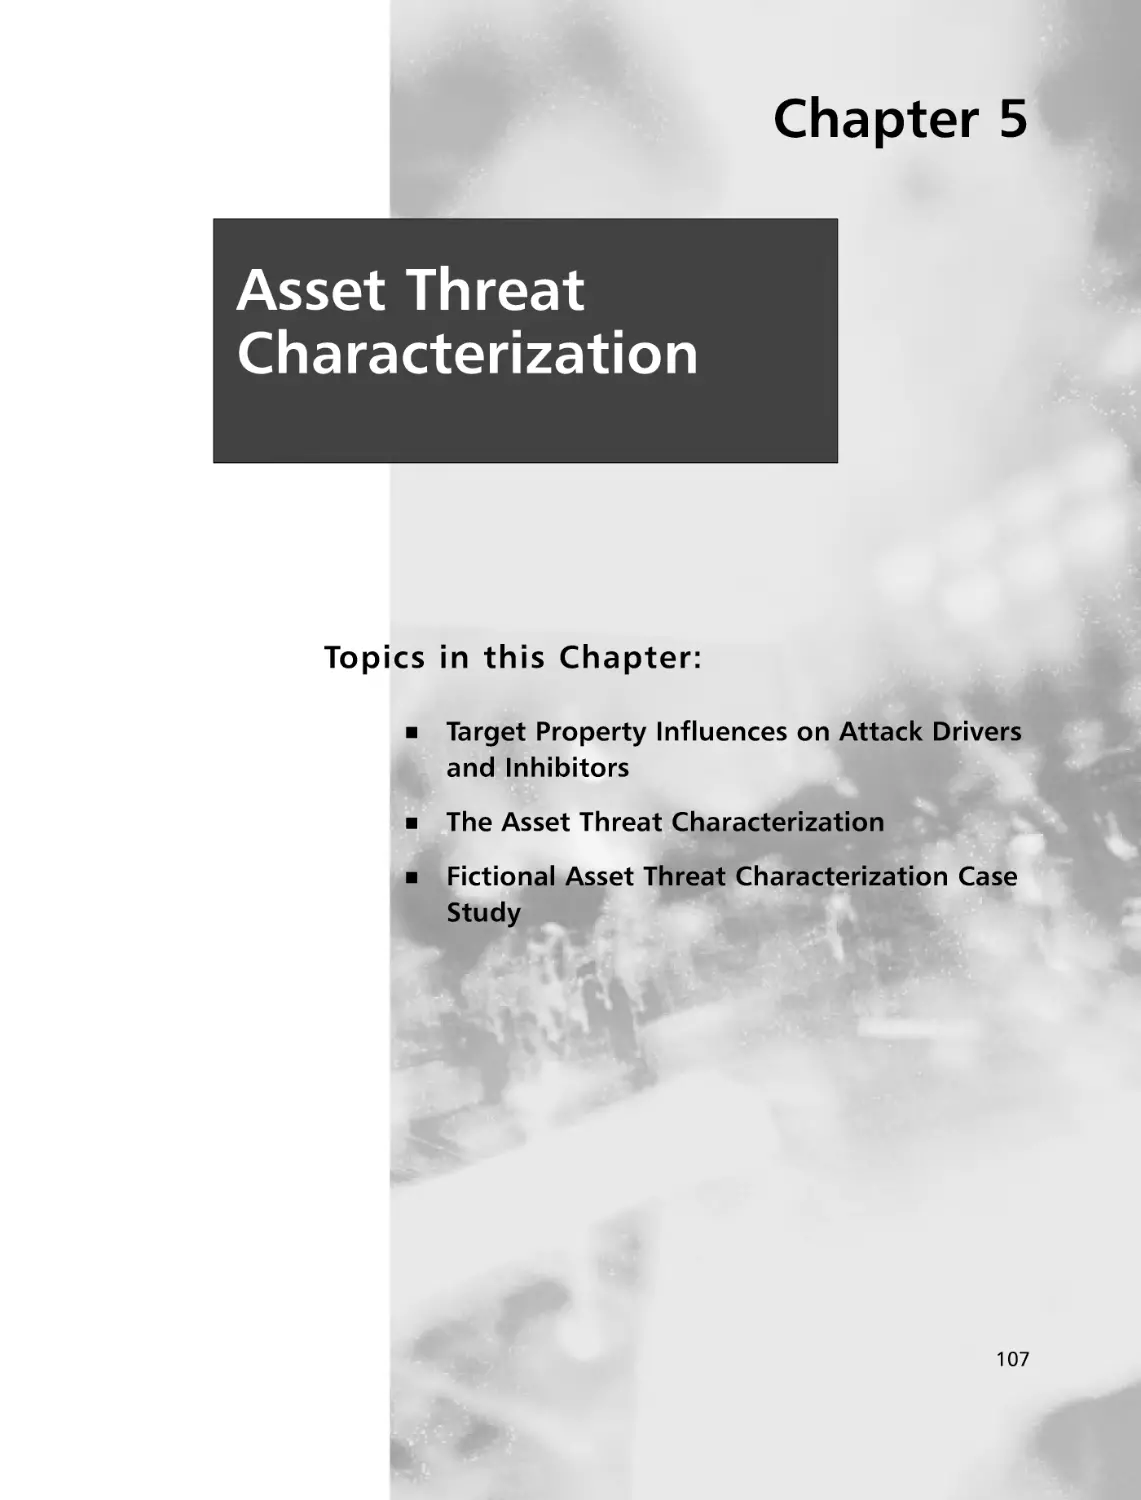 Chapter 5 Asset Threat Characterization